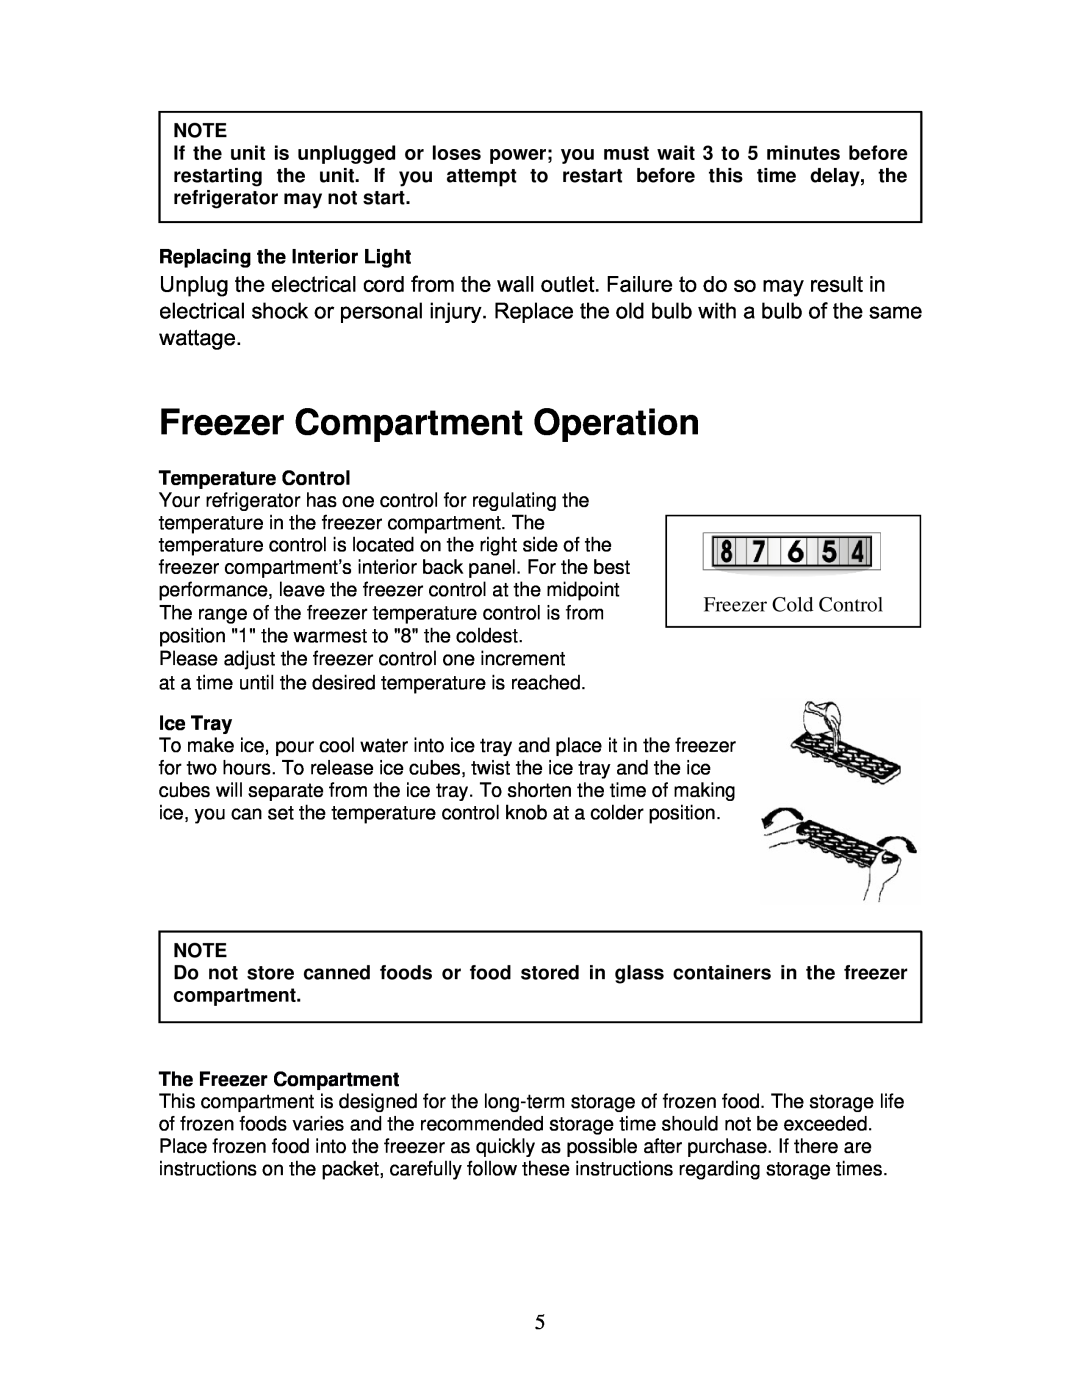 Magic Chef MCBR1020W Freezer Compartment Operation, Freezer Cold Control, Replacing the Interior Light, Ice Tray 